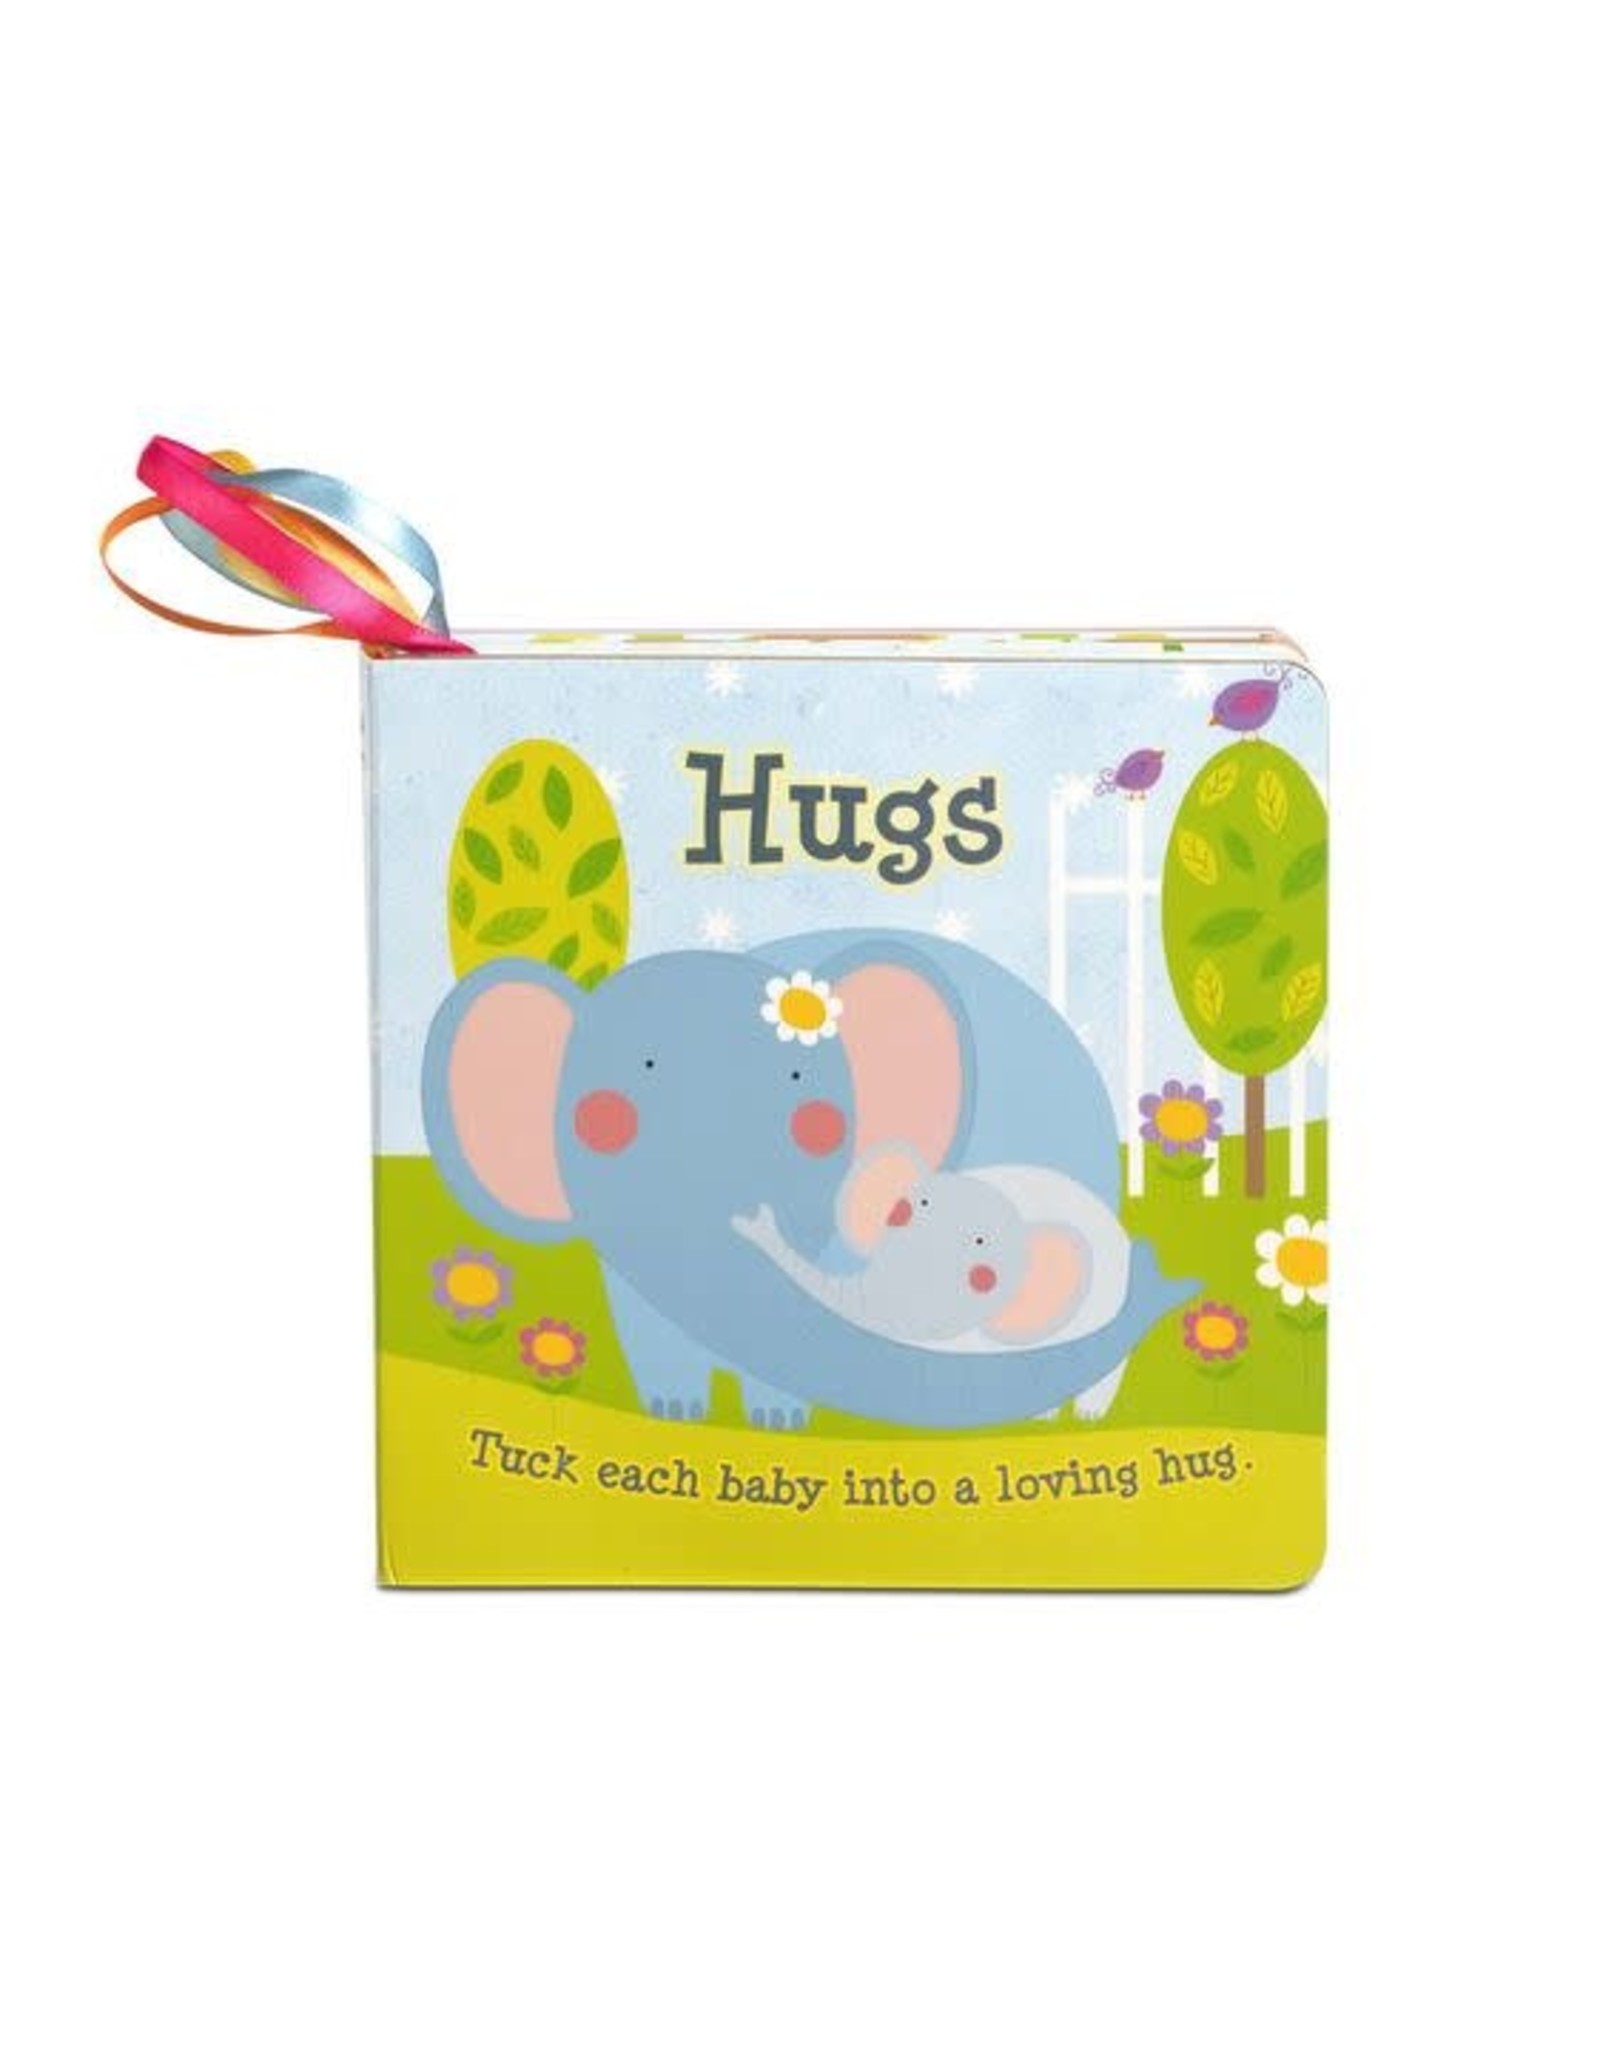 Melissa & Doug Hugs: Tuck Each Baby